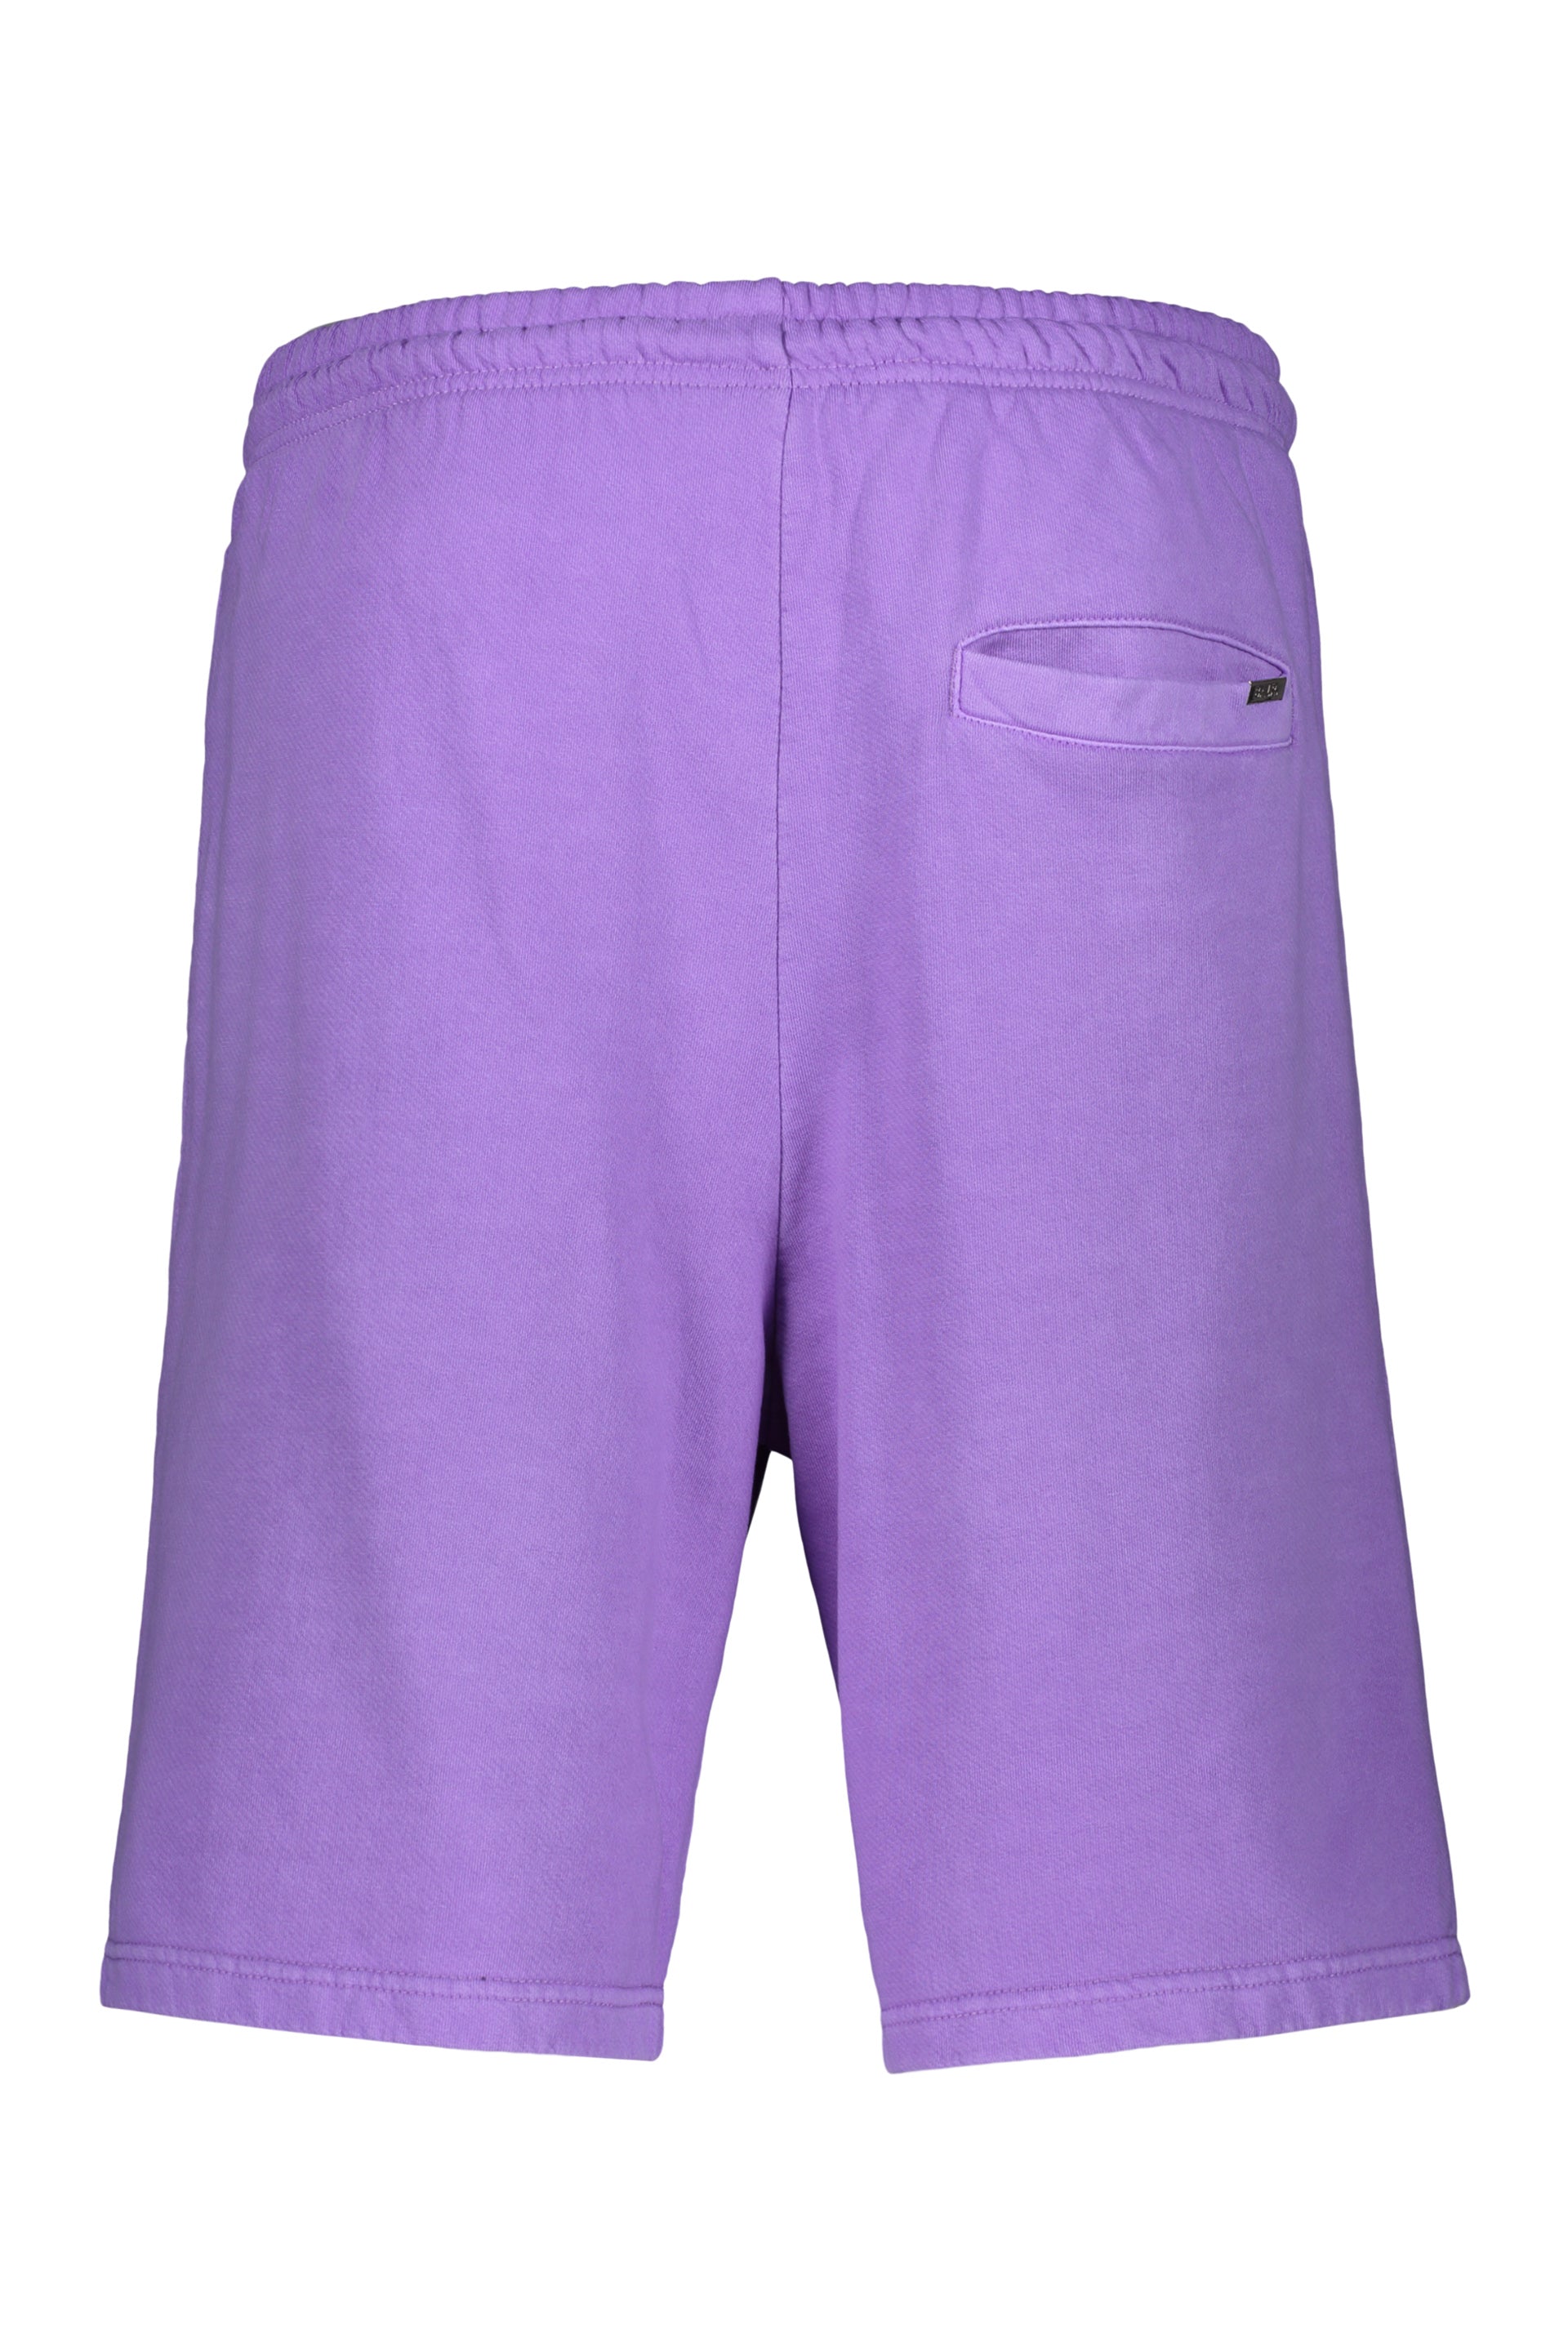 BALR_-OUTLET-SALE-Cotton-bermuda-shorts-Hosen-ARCHIVE-COLLECTION-2.jpg